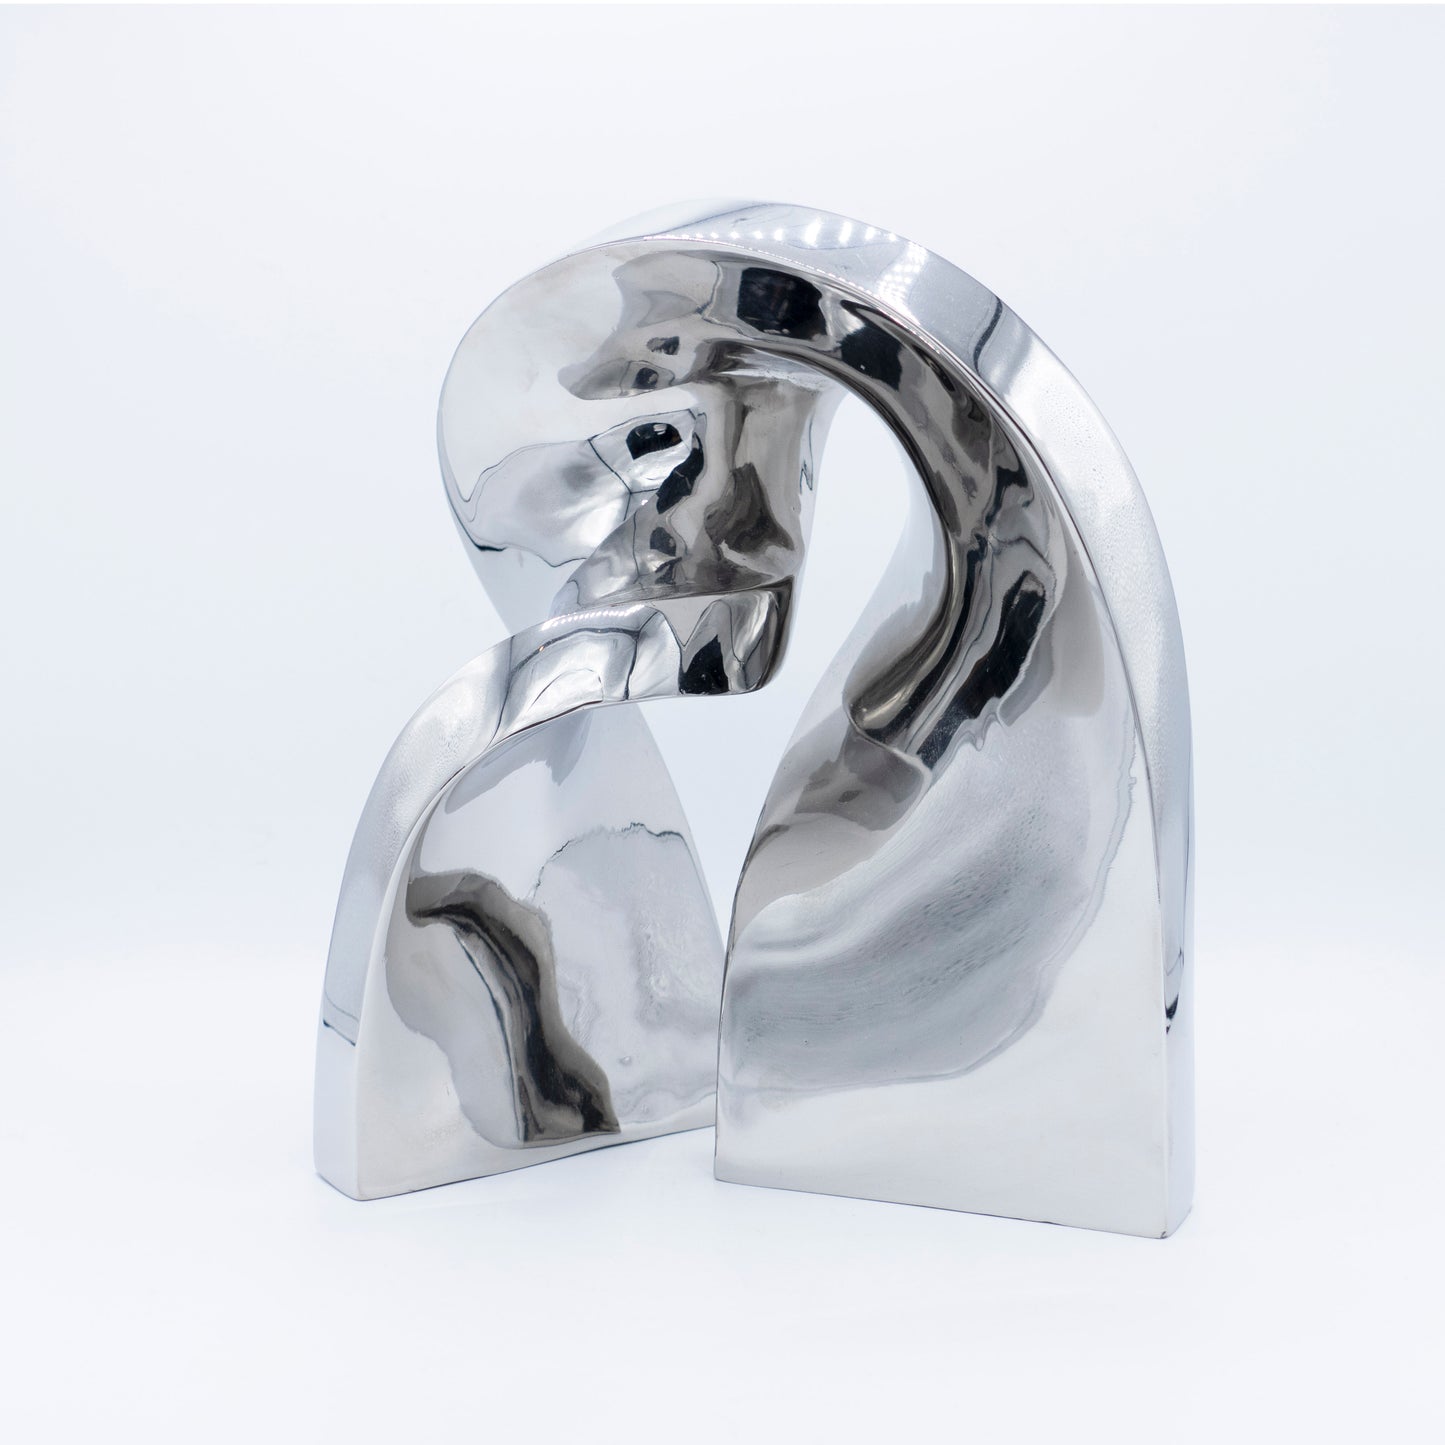 Hysteresis | Stainless Steel Sculpture